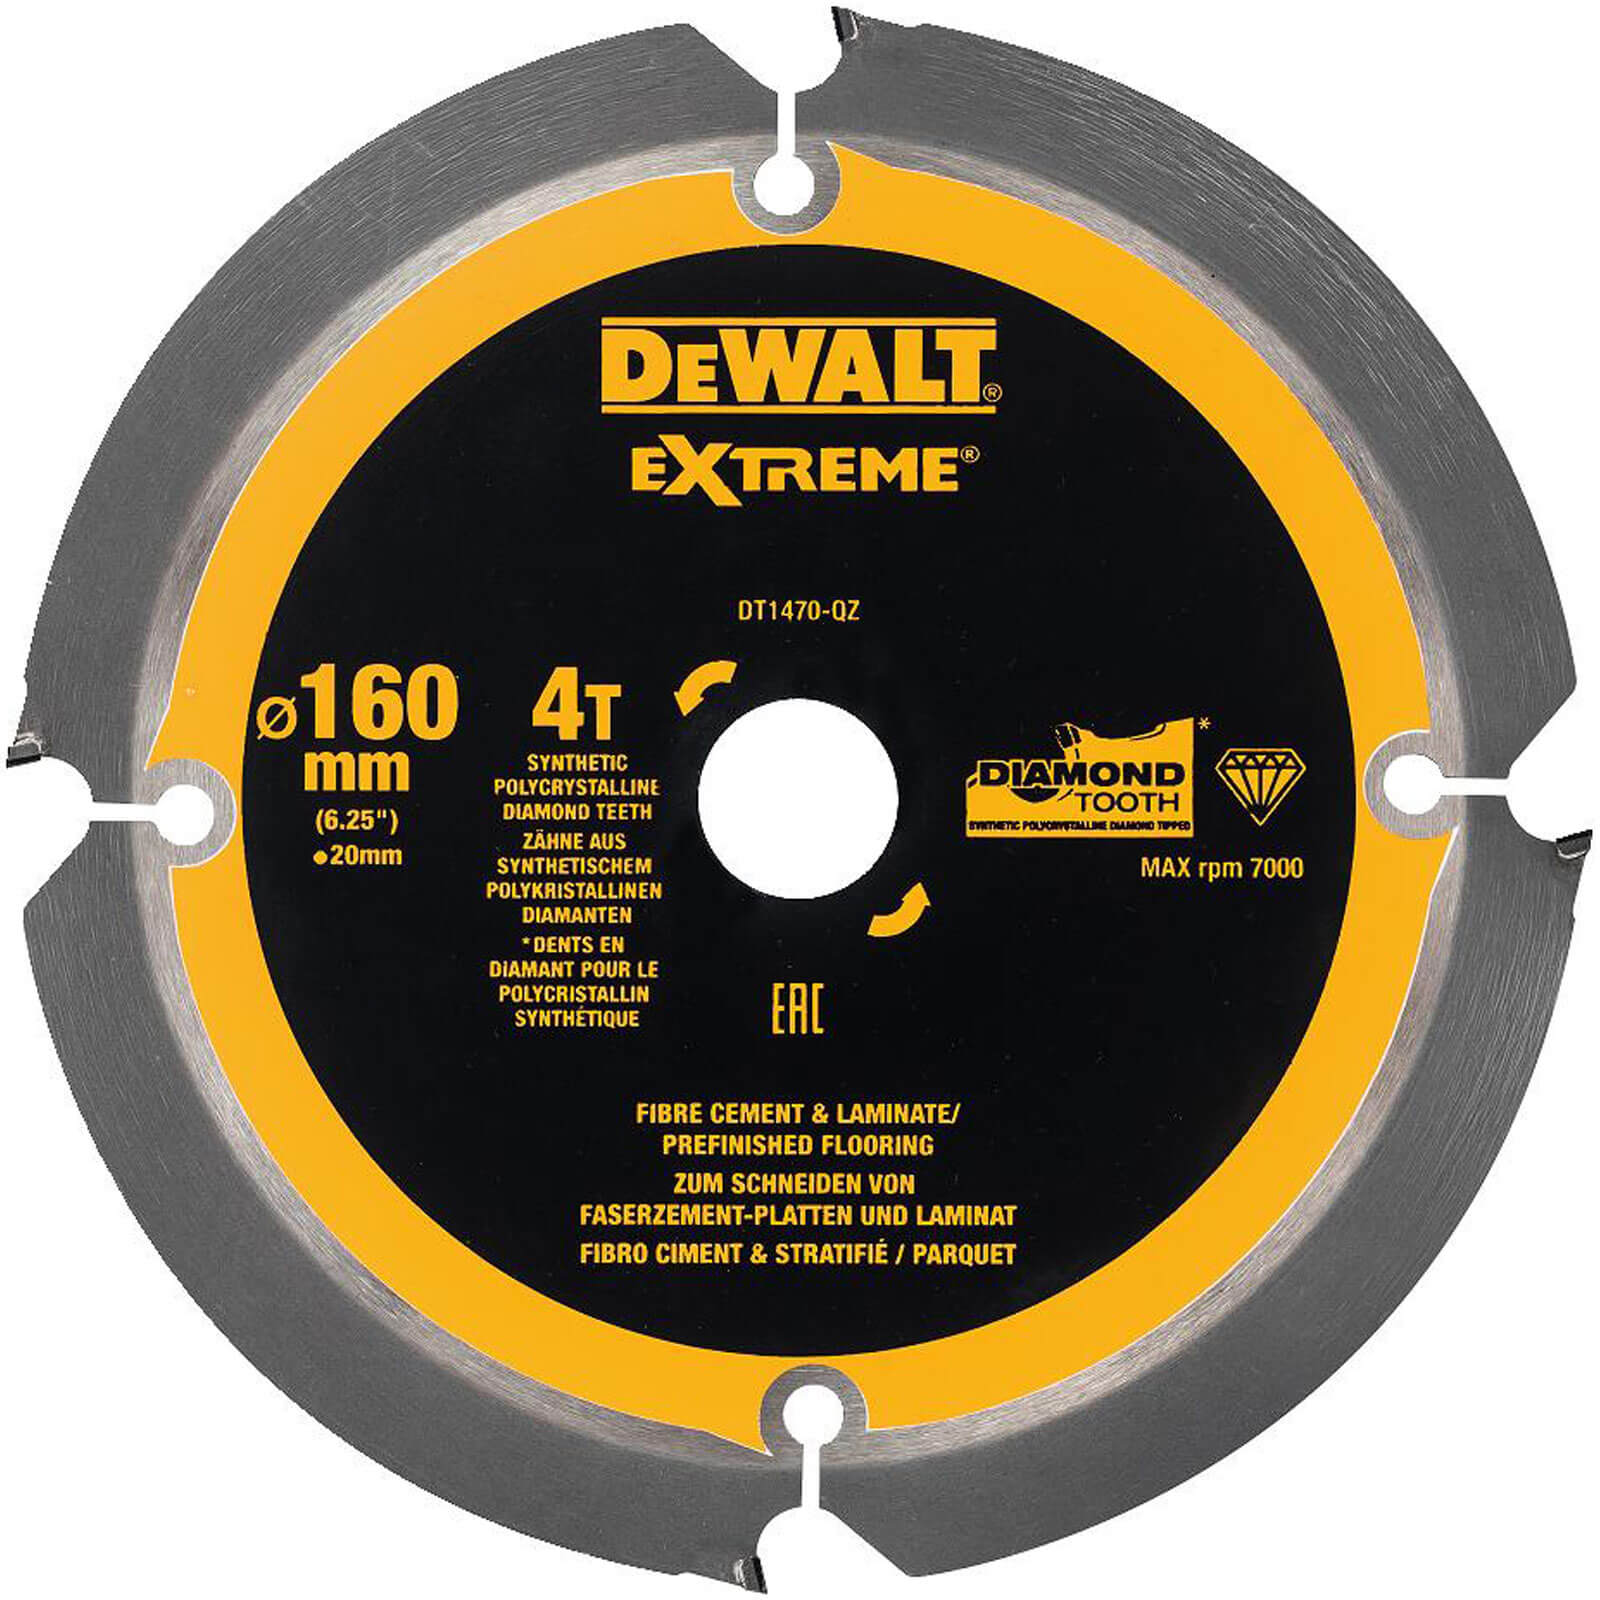 Photo of Dewalt Pcd Fibre Cement Saw Blade 160mm 4t 20mm